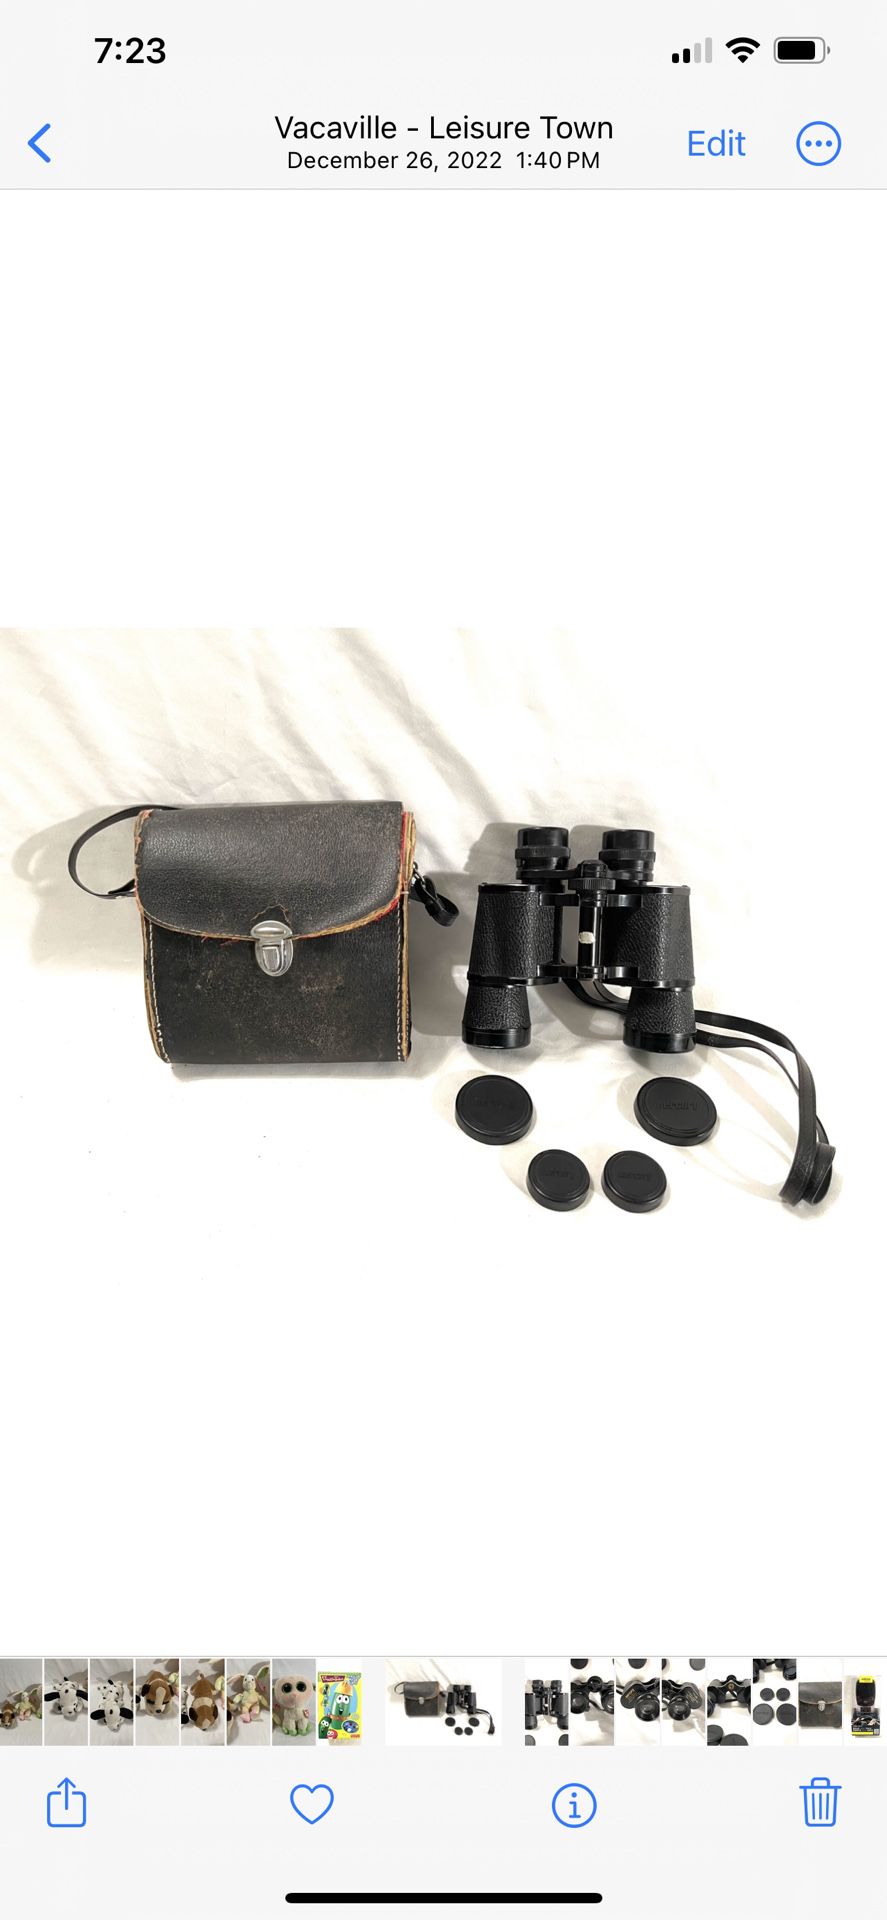 Antique World War Ii Era Mercury Binoculars. Comes with original case and lens caps.